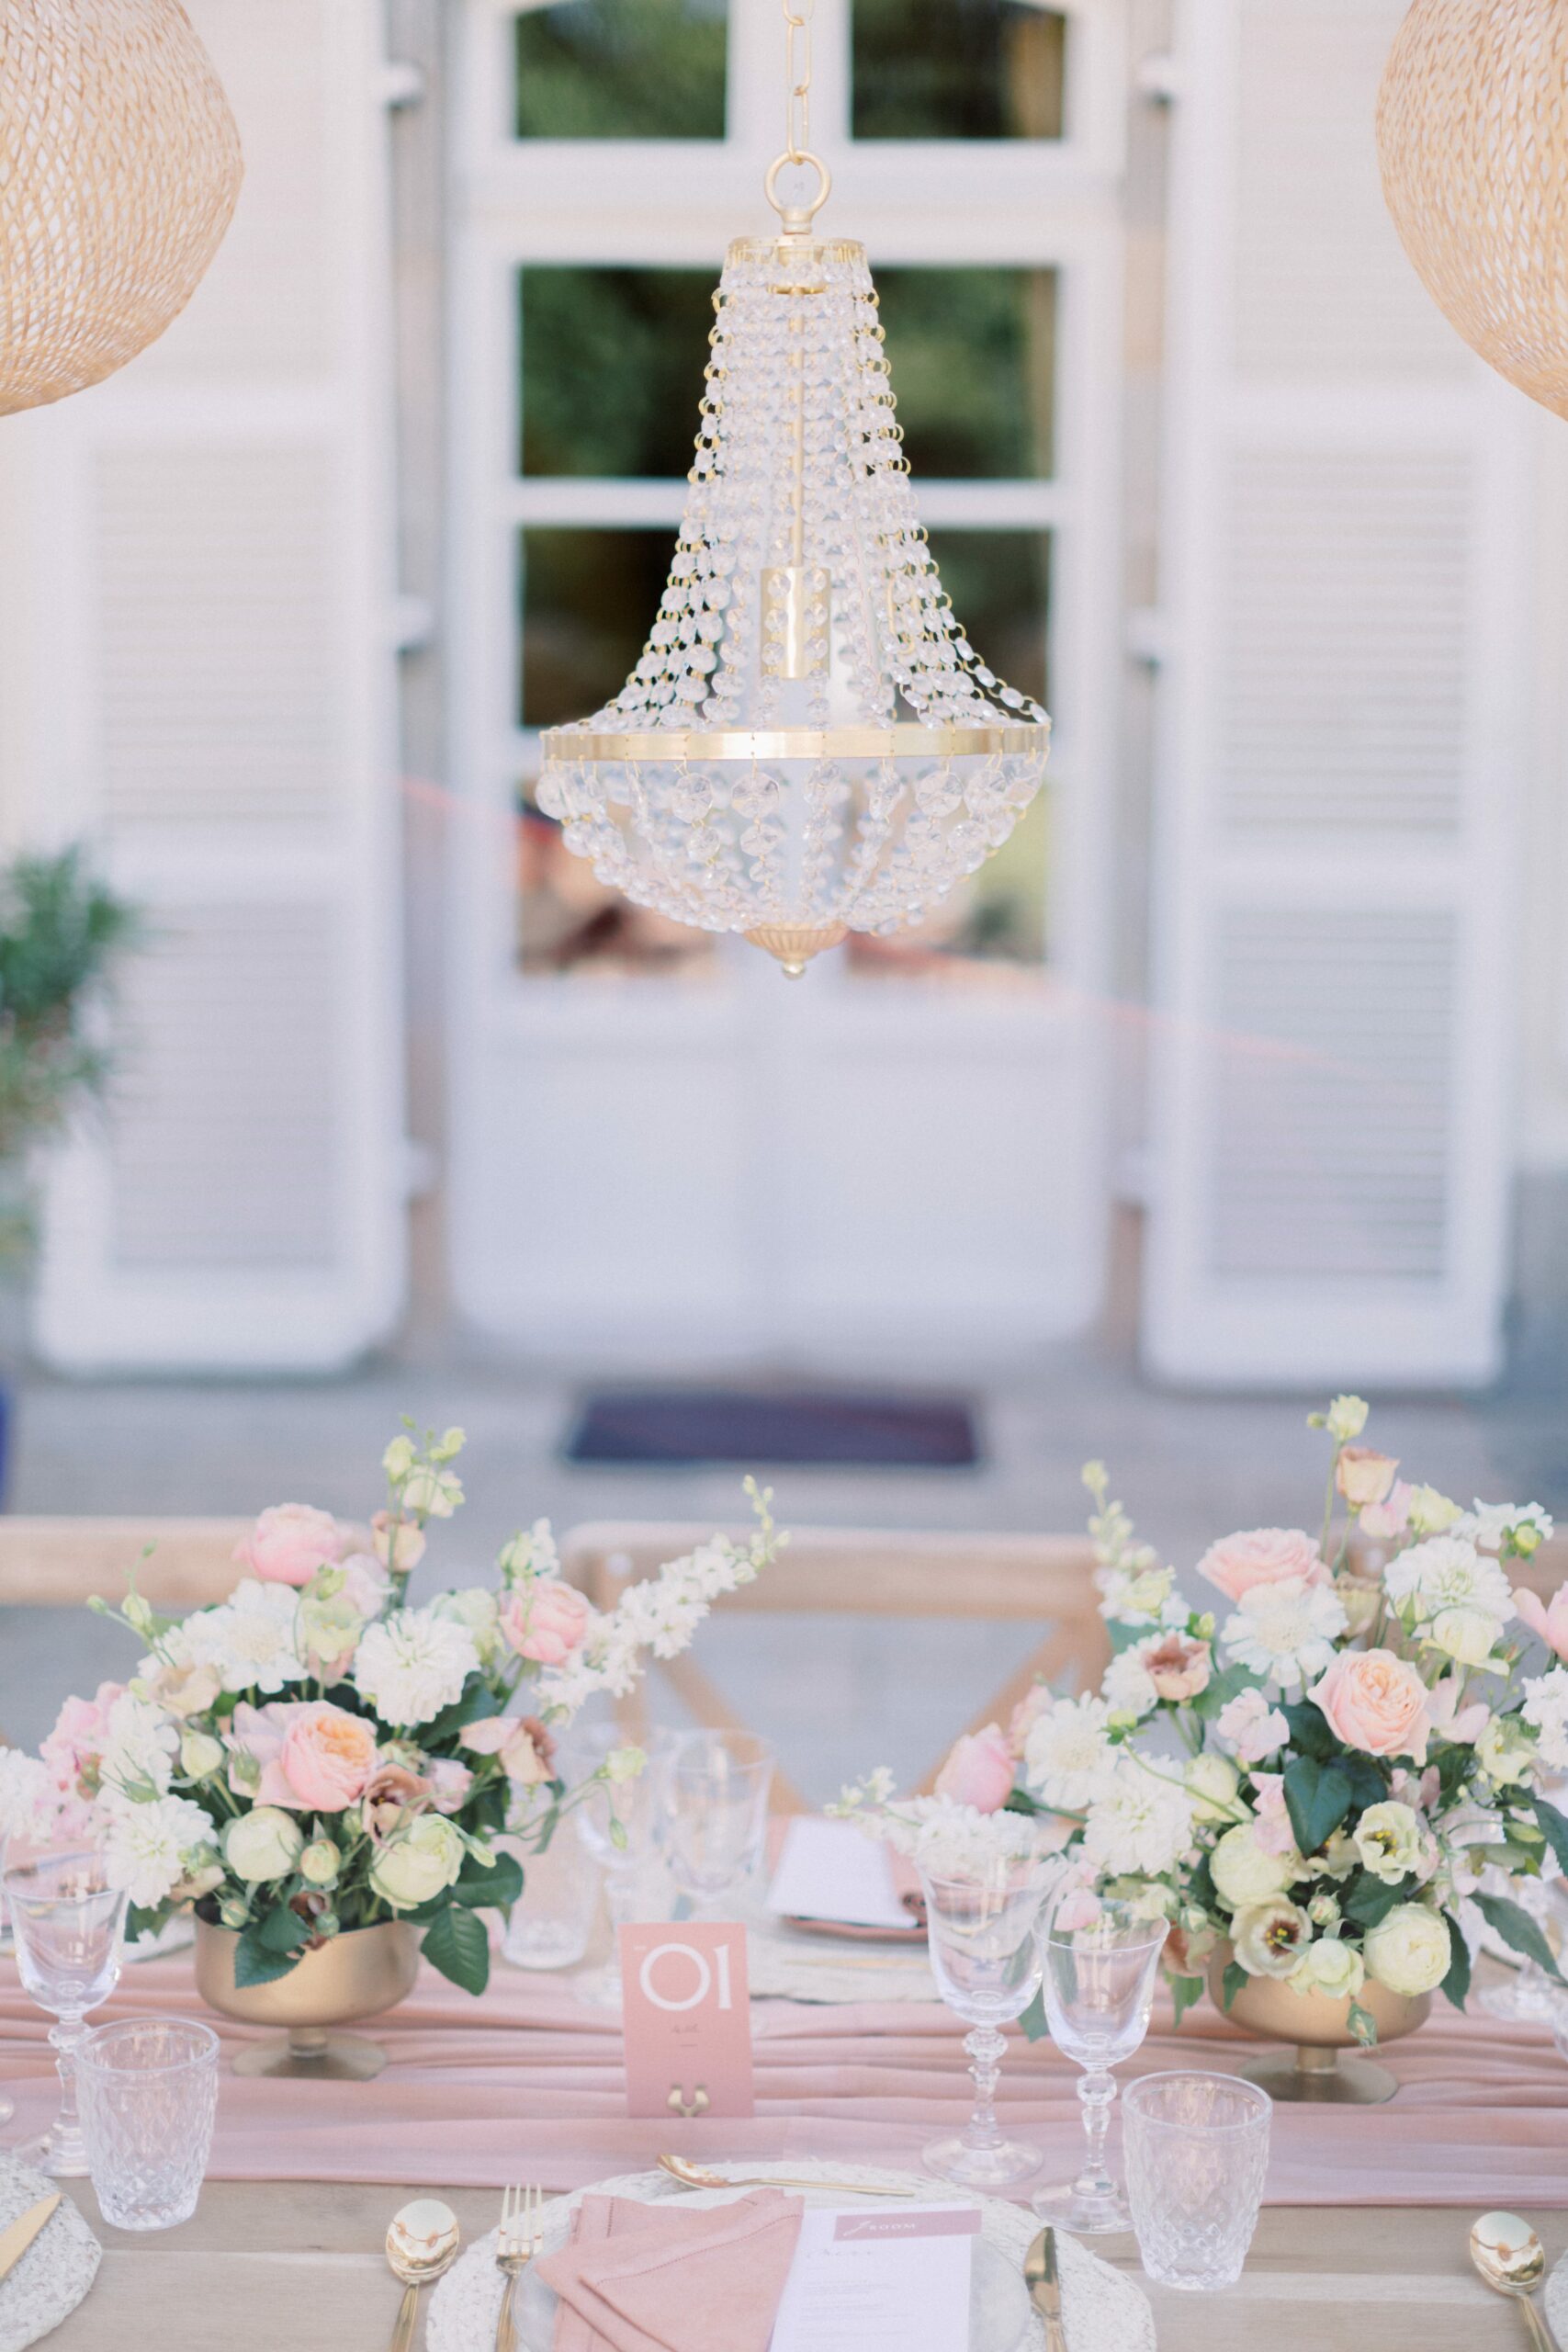 décoration table mariage rose blush mariage bretagne